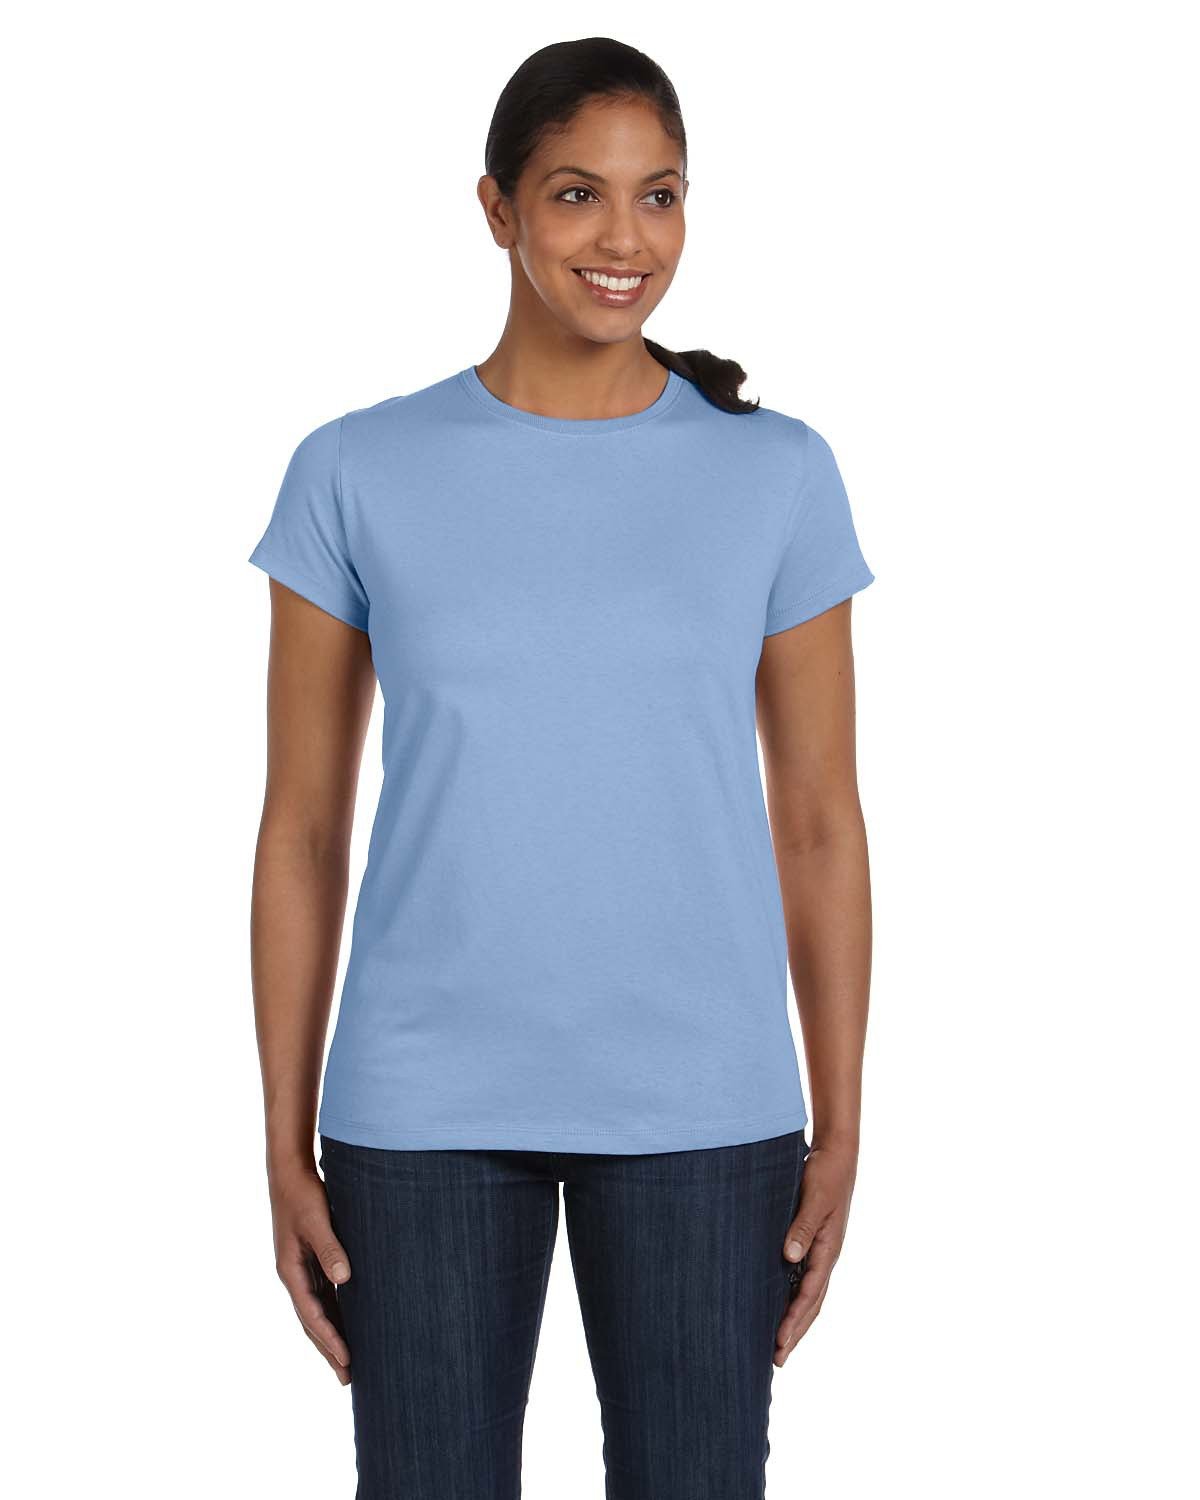 Hanes Ladies' Essential-T T-Shirt LIGHT BLUE 